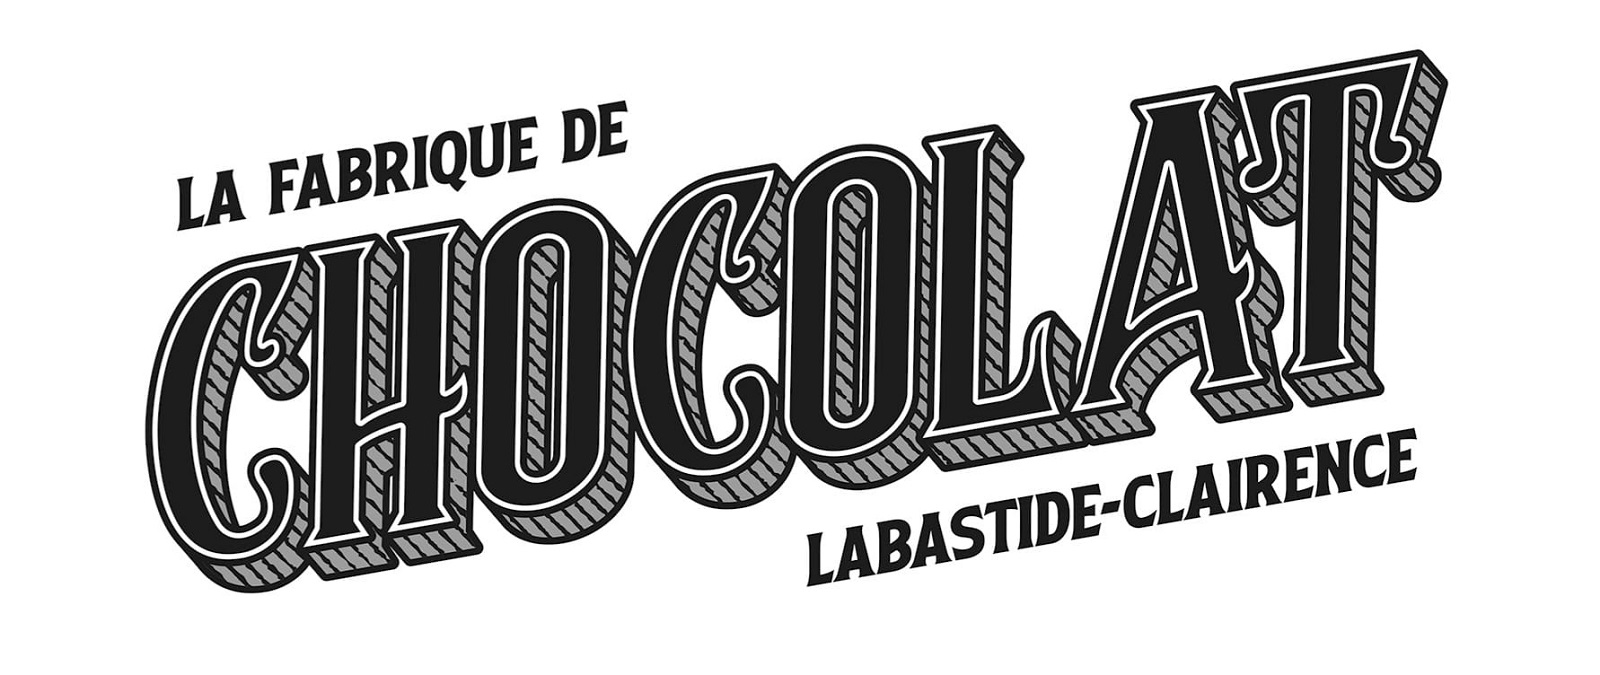 La Fabrique de Chocolat - Products of the Basque Country in La  Bastide-Clairence - Guide du Pays Basque